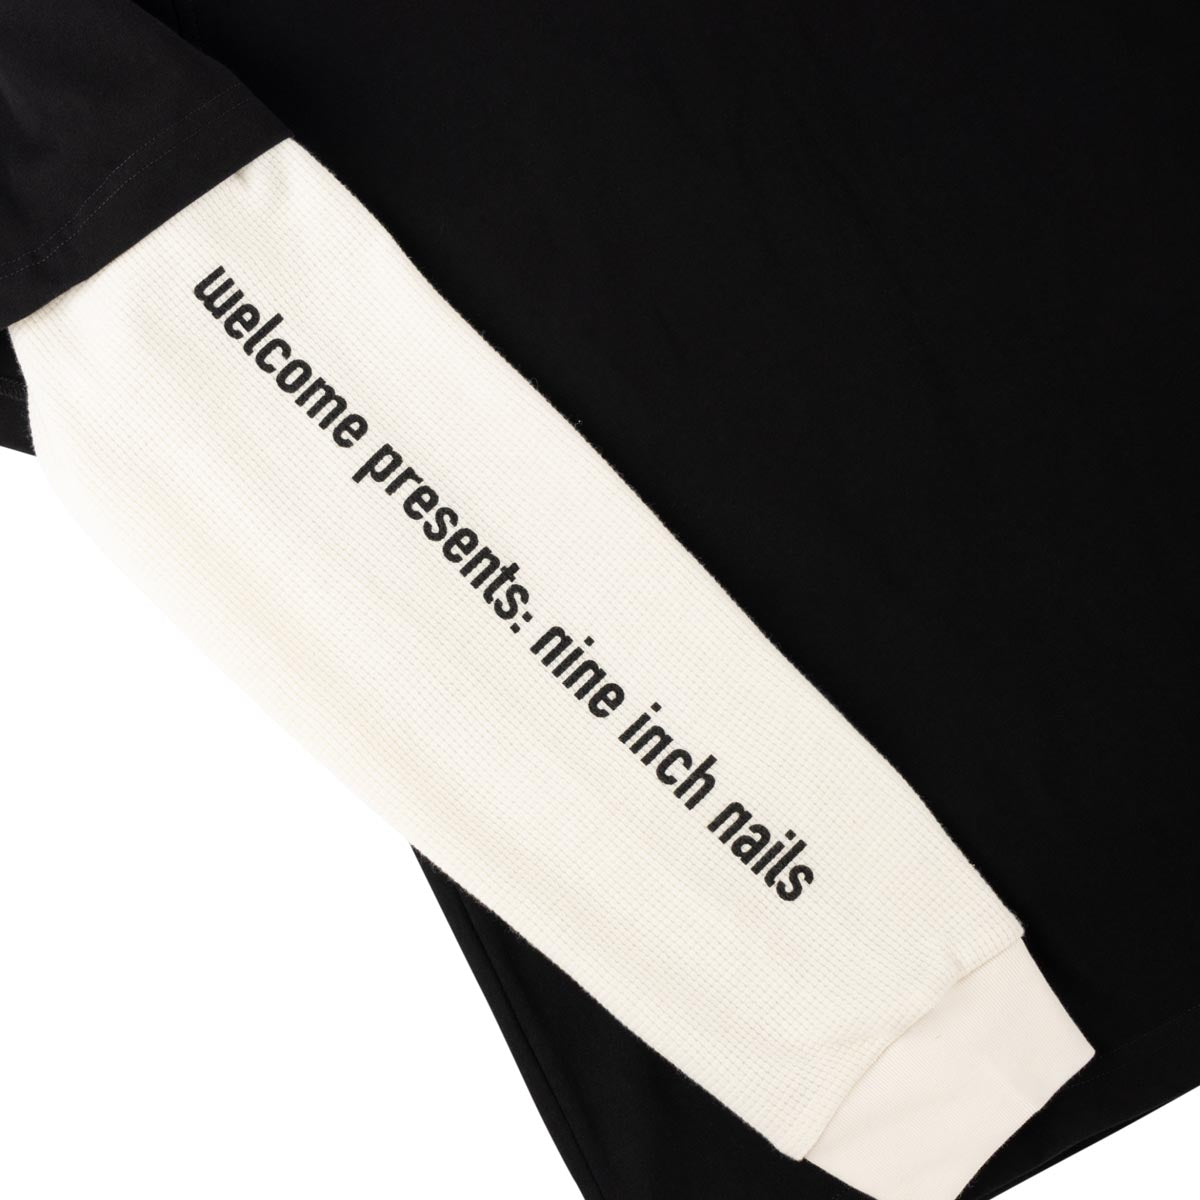 Welcome x Nine Inch Nails Heresy Layered Knit Shirt - Black/Bone image 3